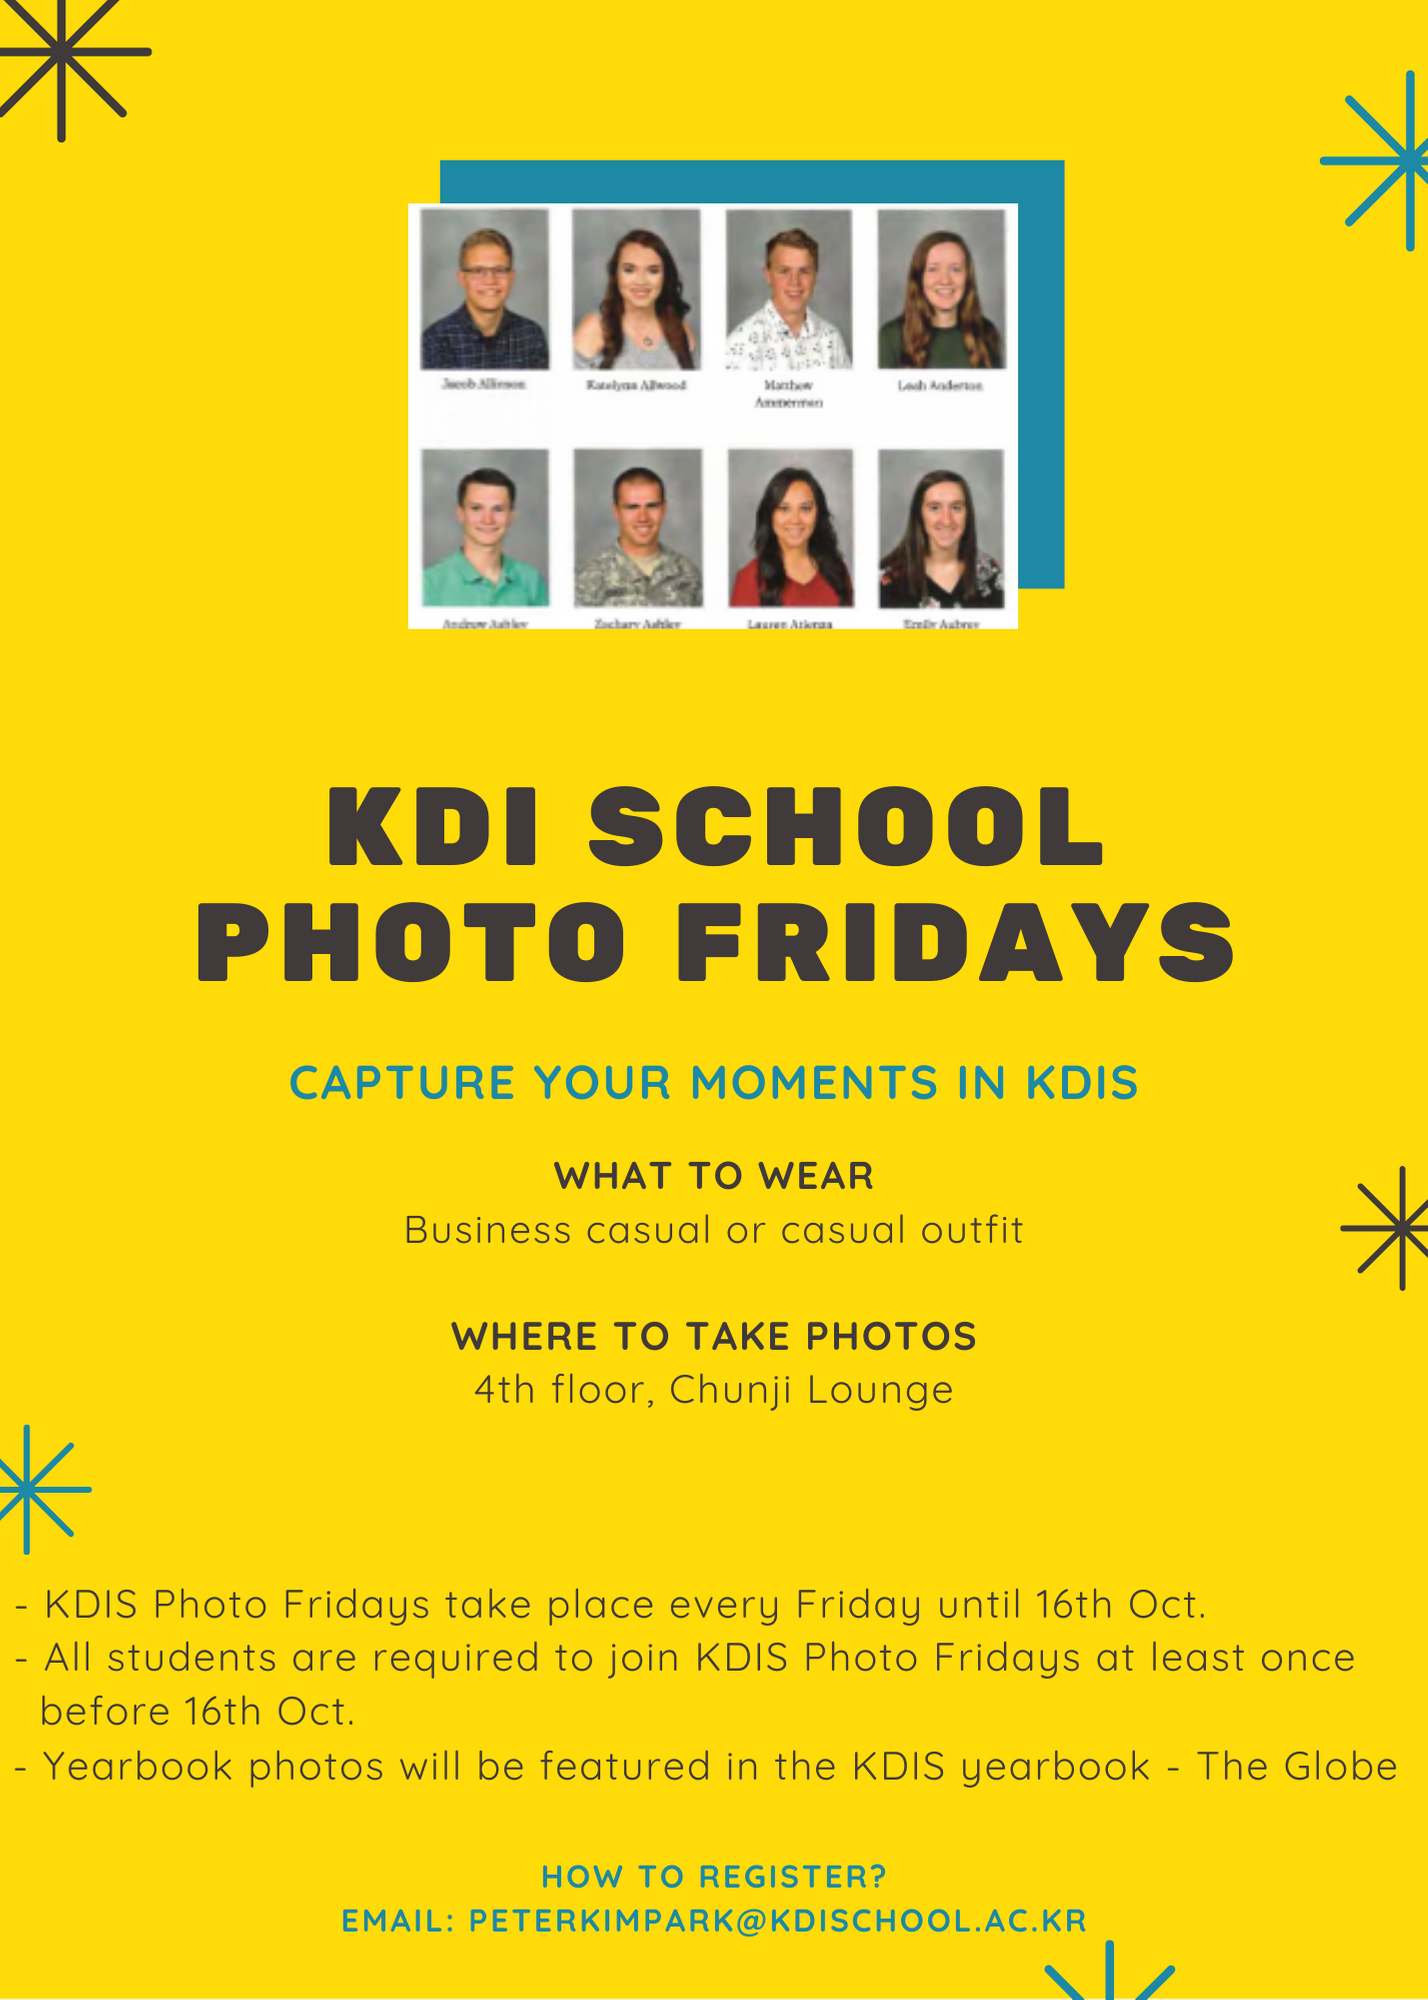 [RSVP] KDI School 3rd Photo Friday (March 6)